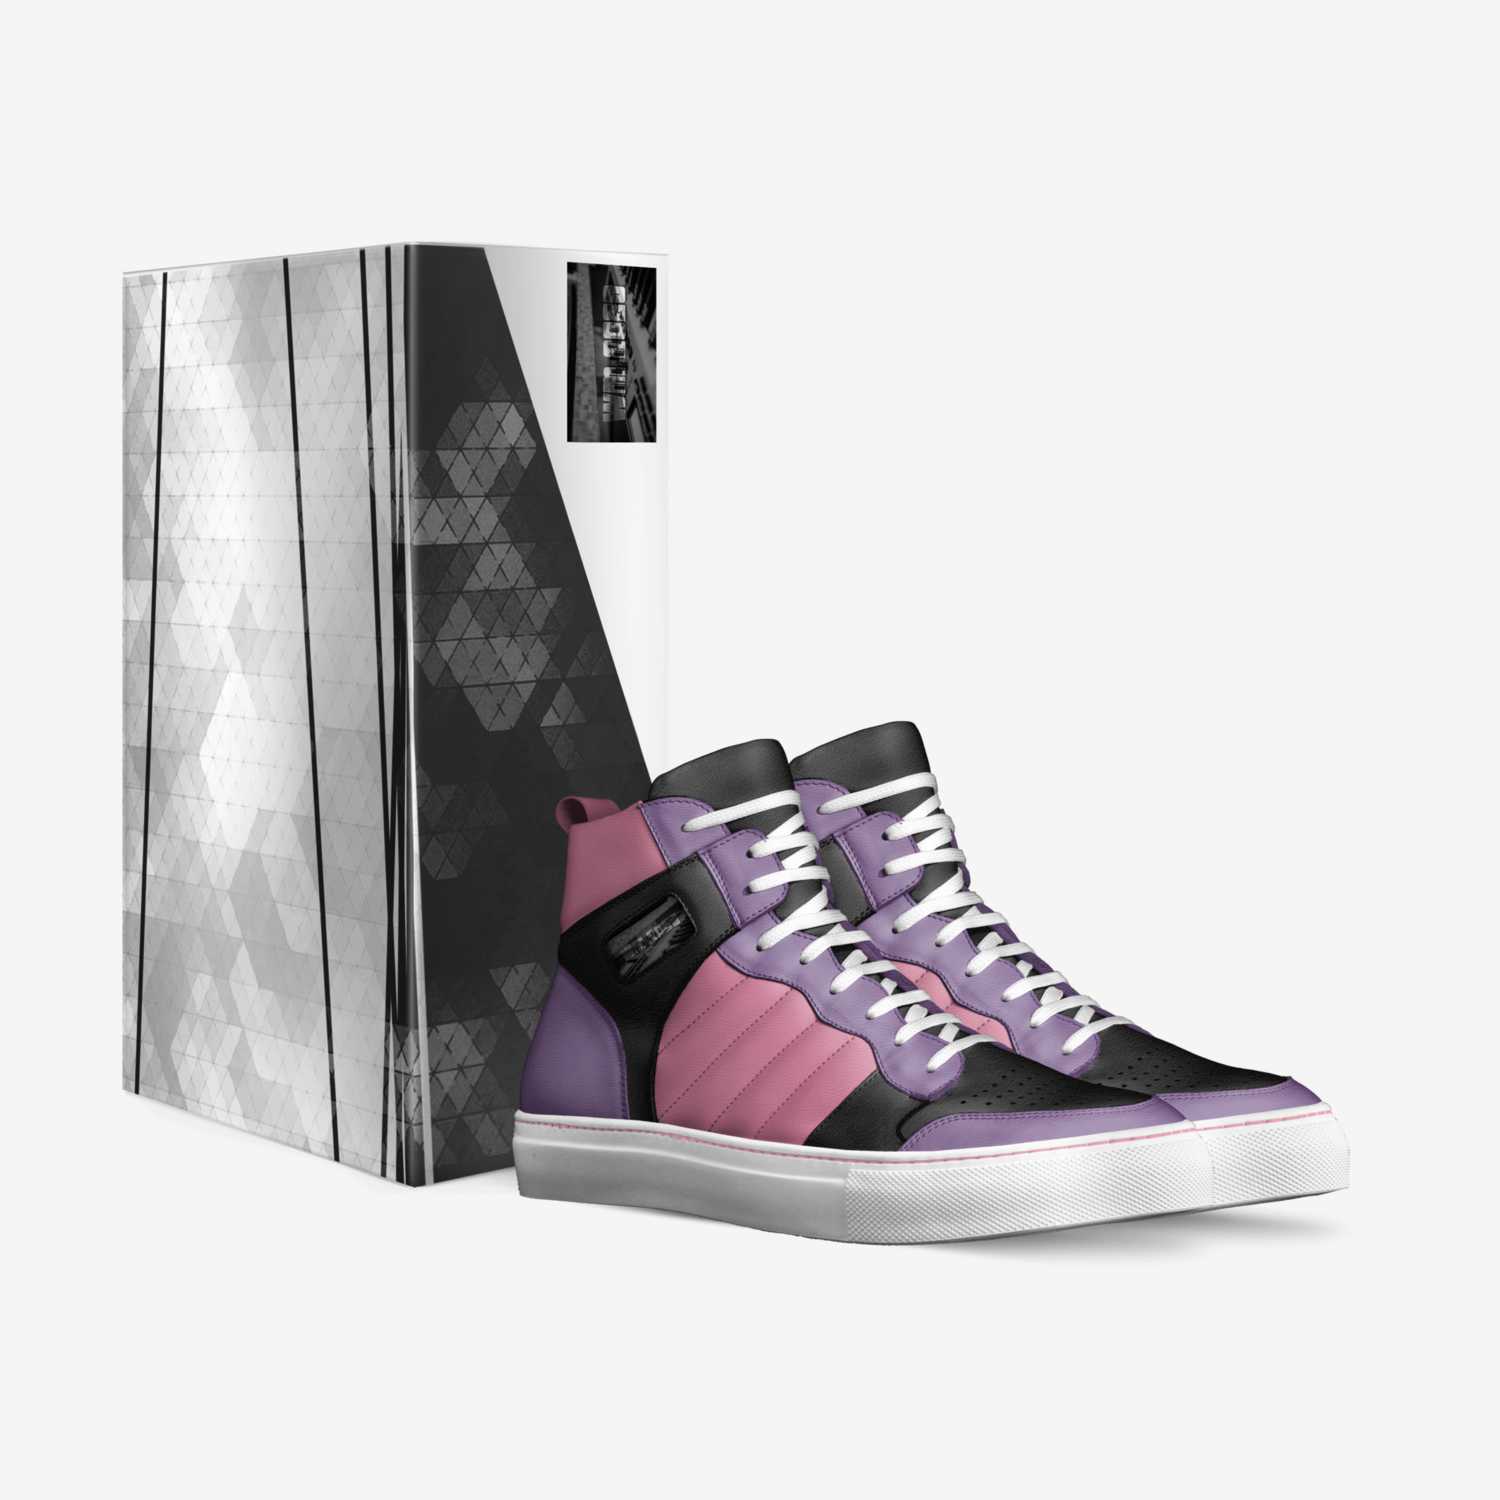 Wyshmaster 2020 custom made in Italy shoes by Adam Cherrington | Box view